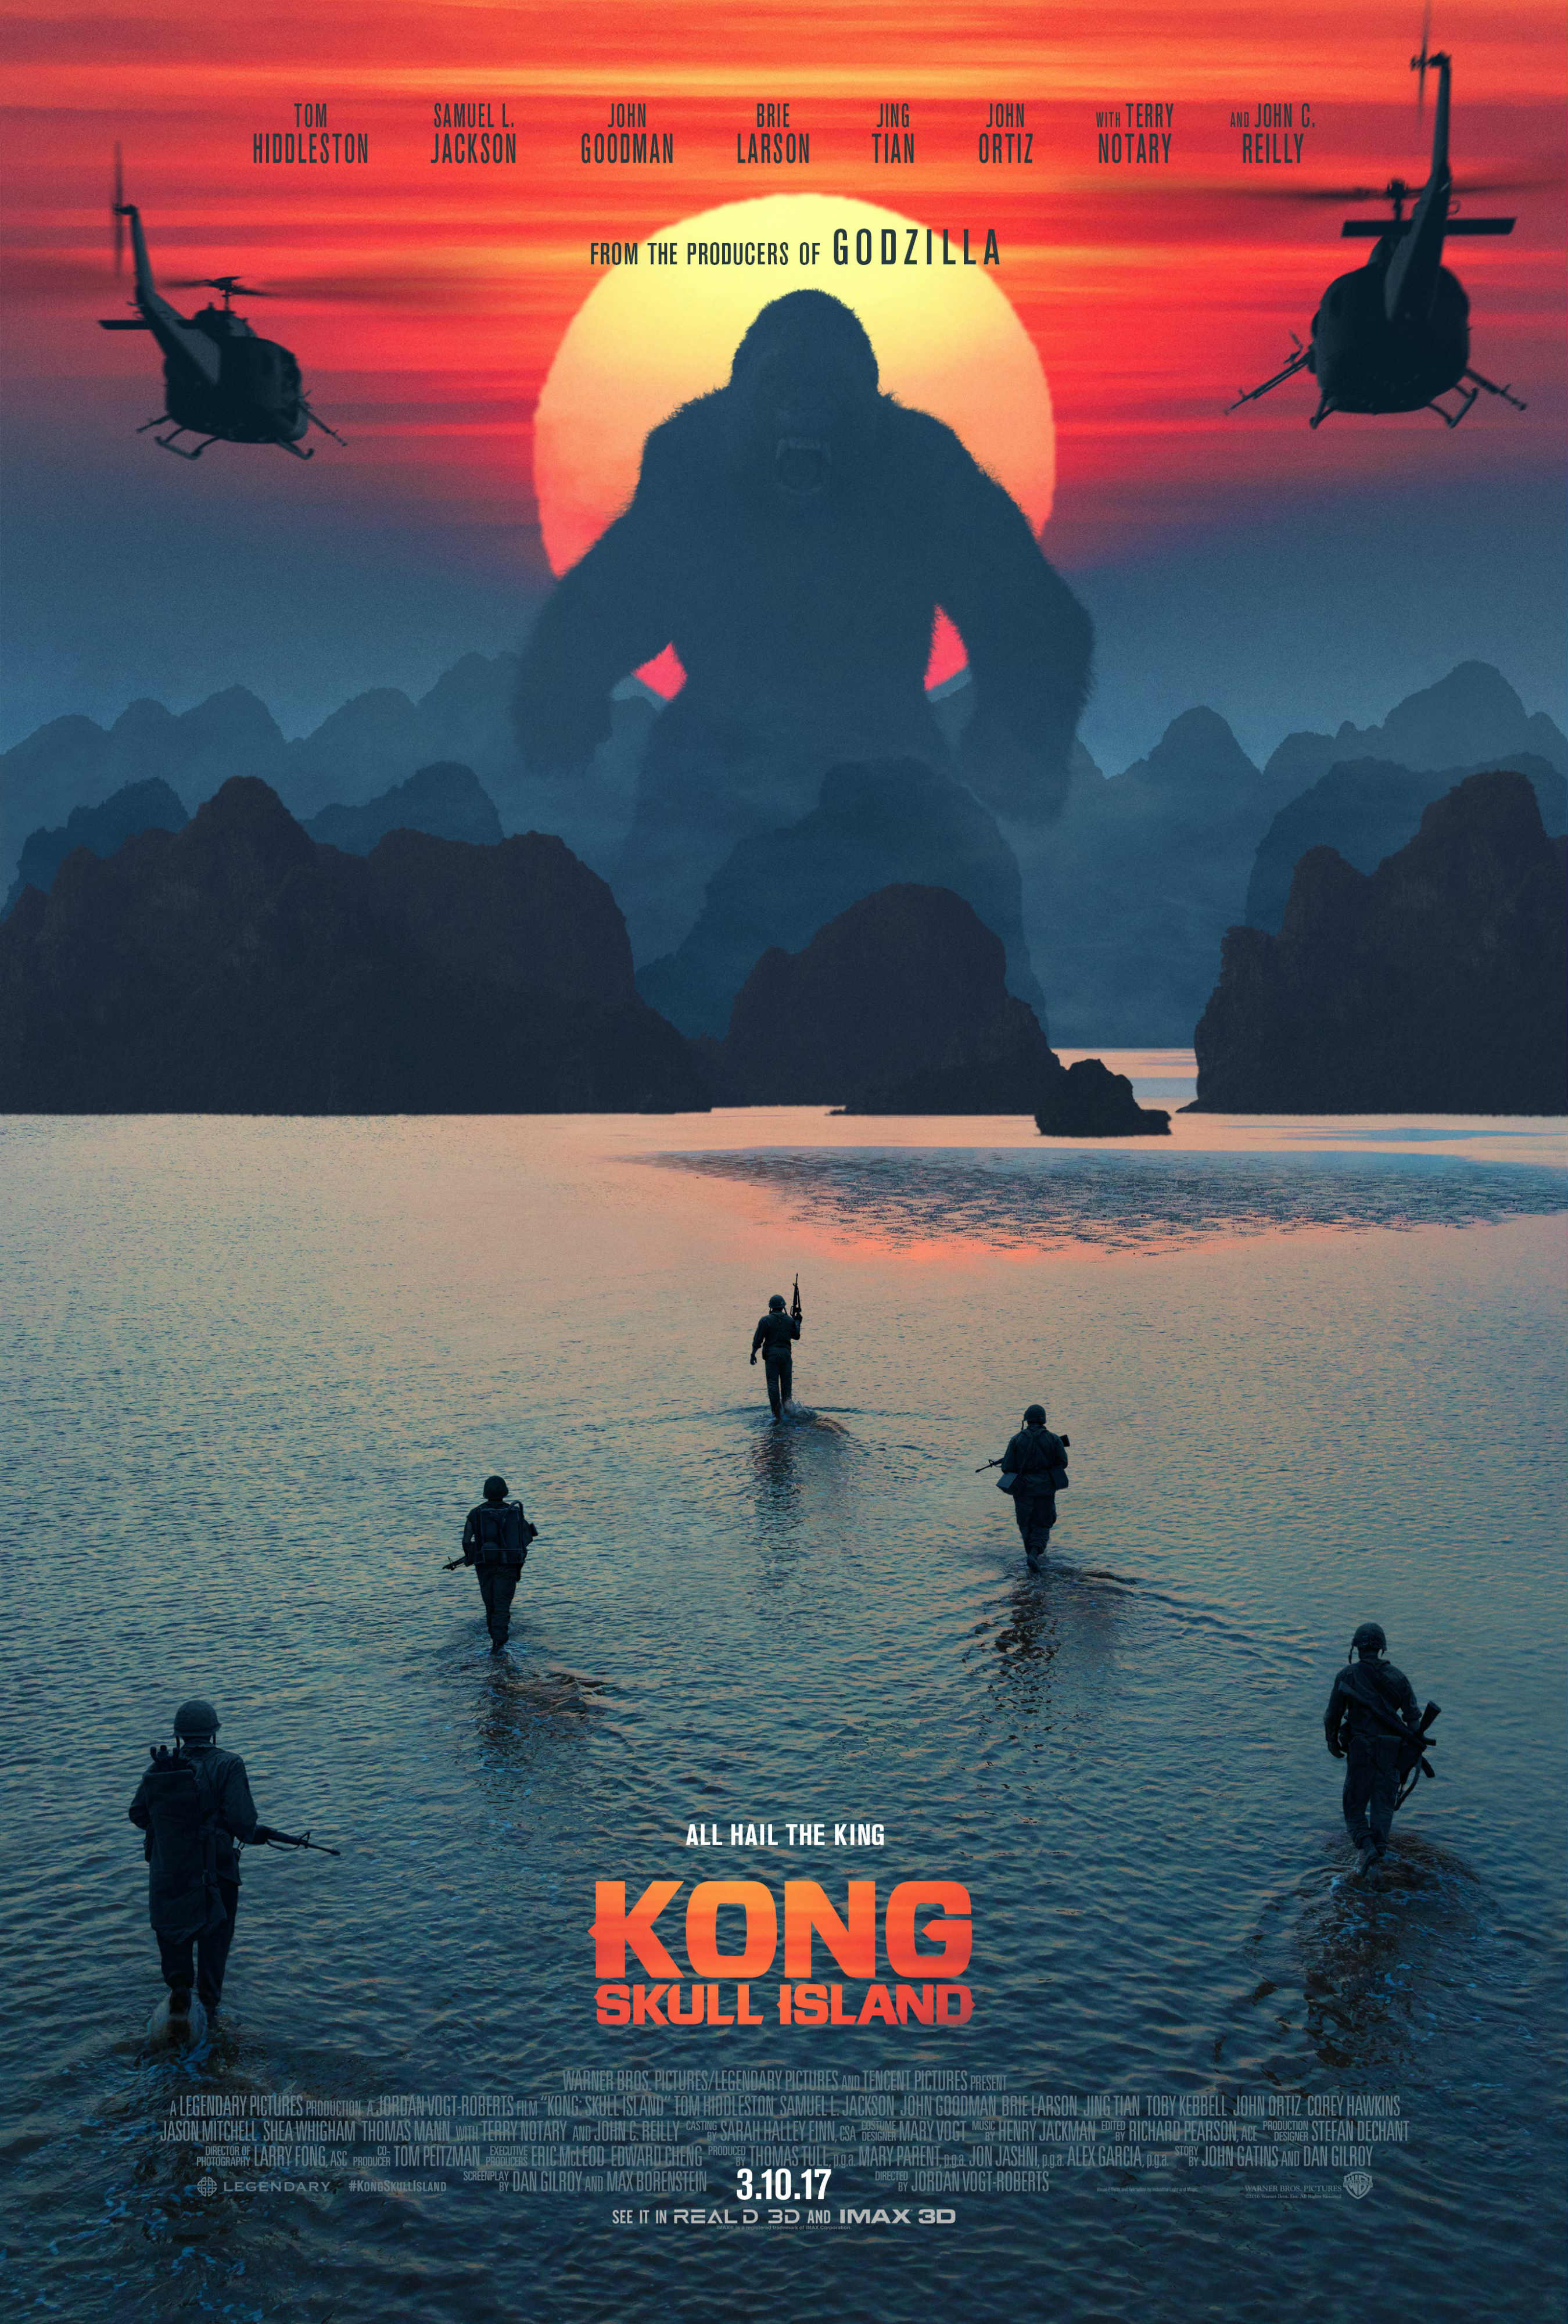 Kong: Skull Island Online Trailer Watch 2017